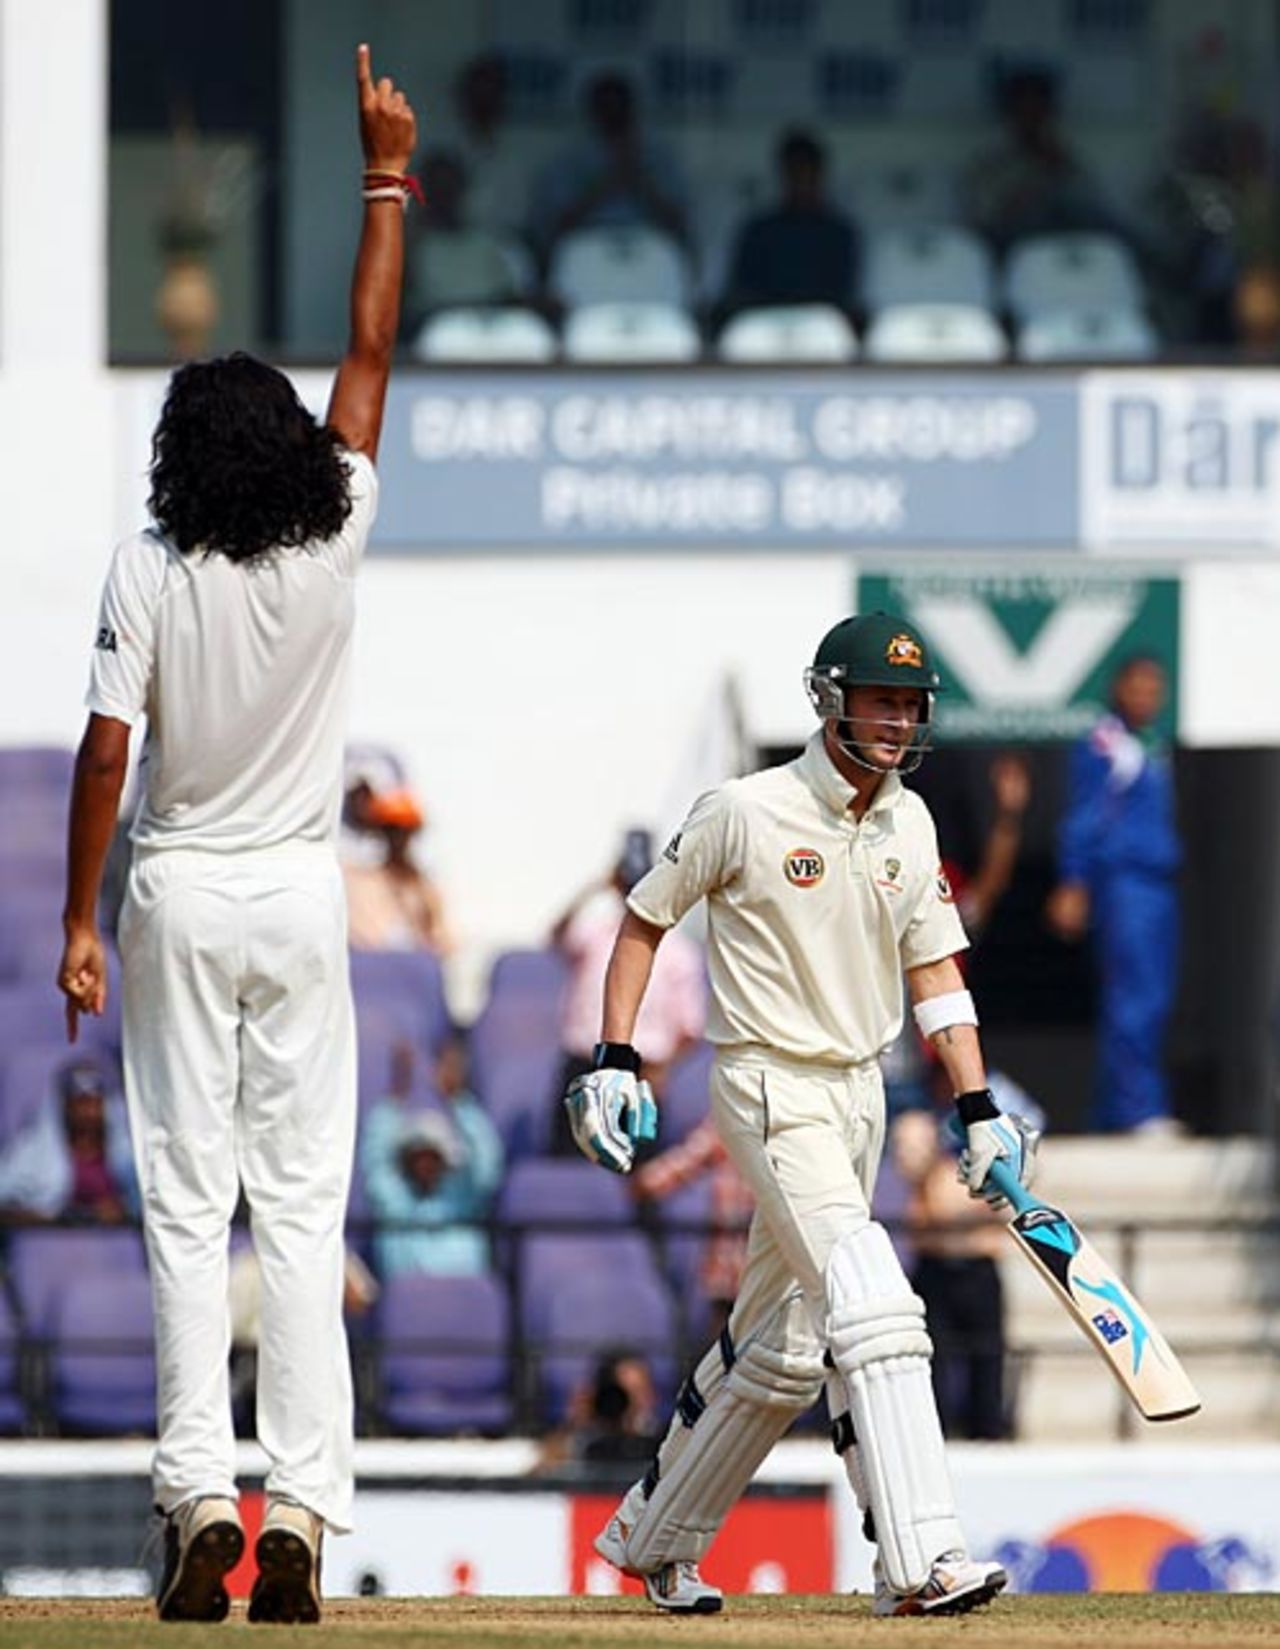 Ishant Sharma is on a high after dismissing Michael Clarke, India v Australia, 4th Test, Nagpur, 5th day, November 10, 2008